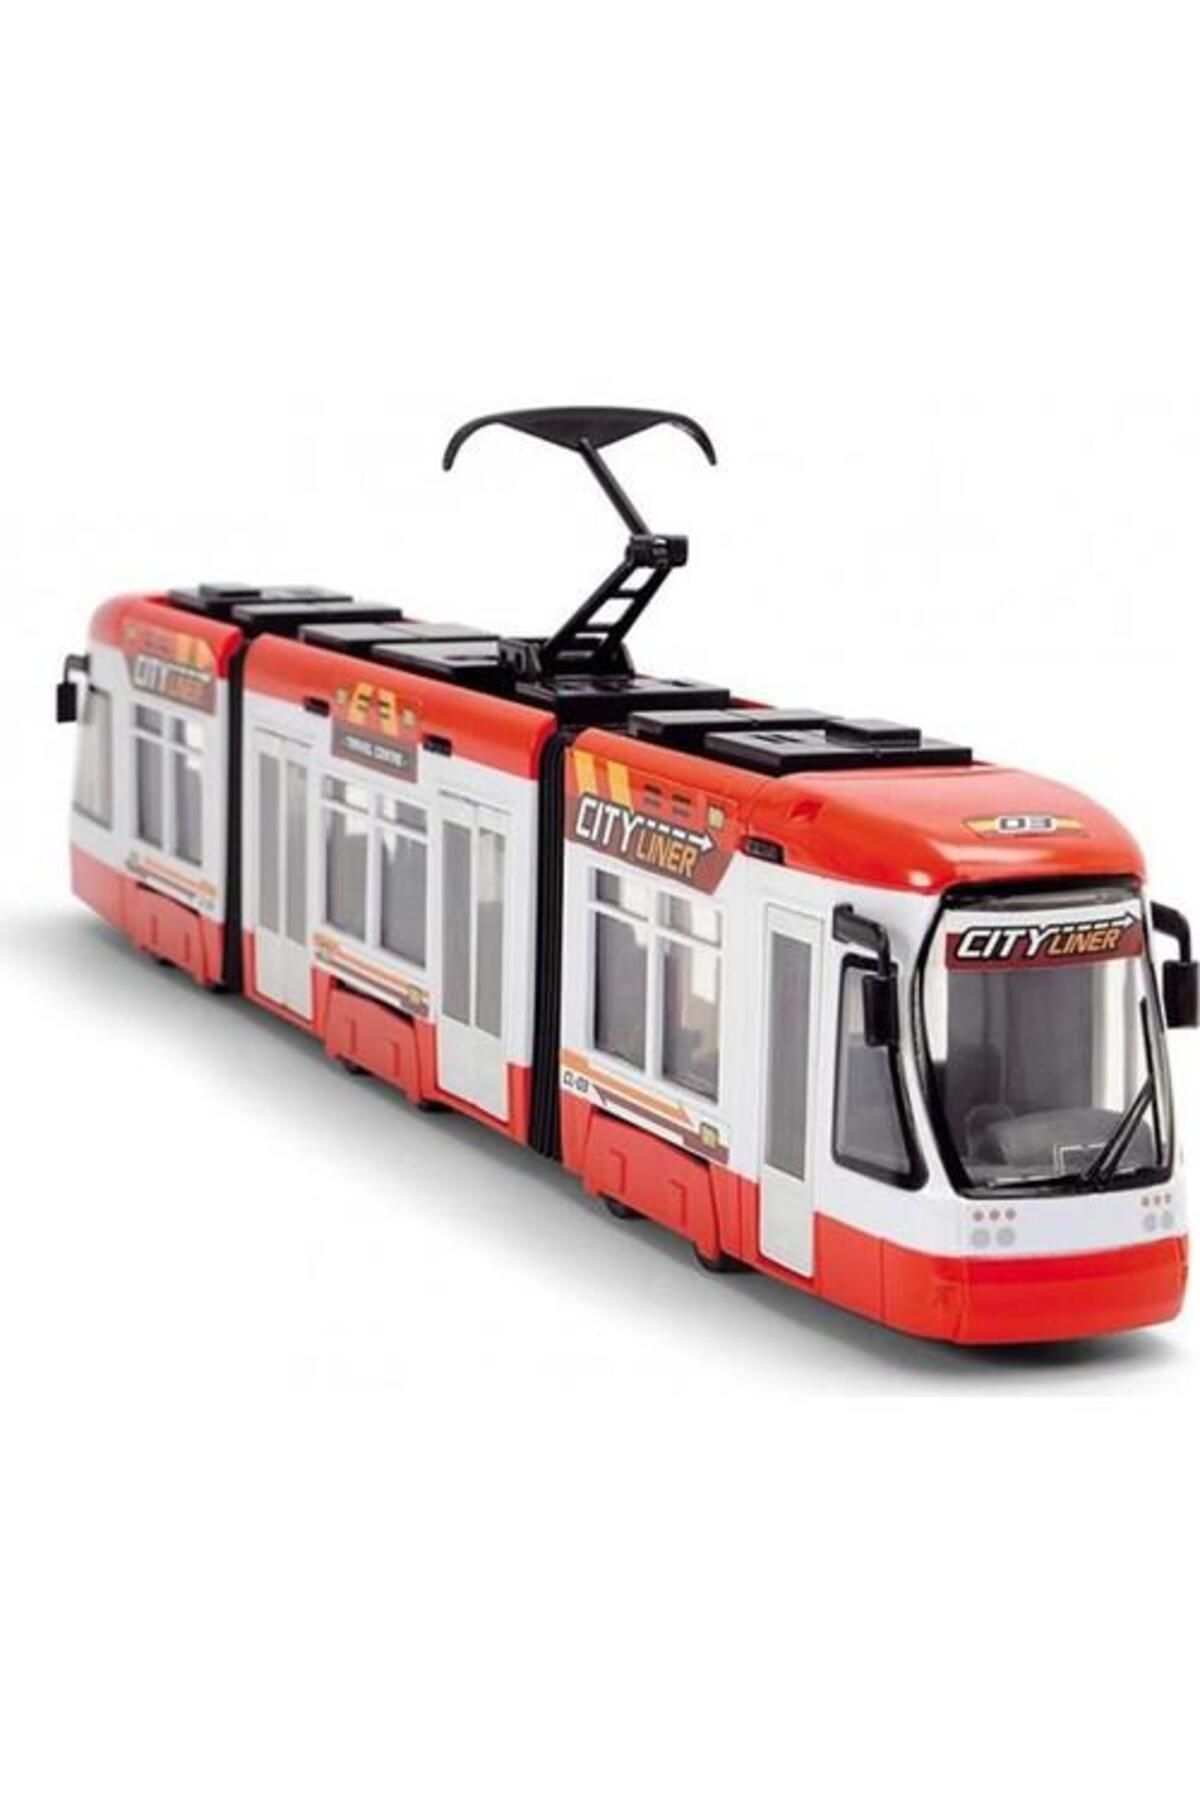 Dickie Toys Dickie Şehir Express Tramvayı - Kırmızı, 46cm 203749017